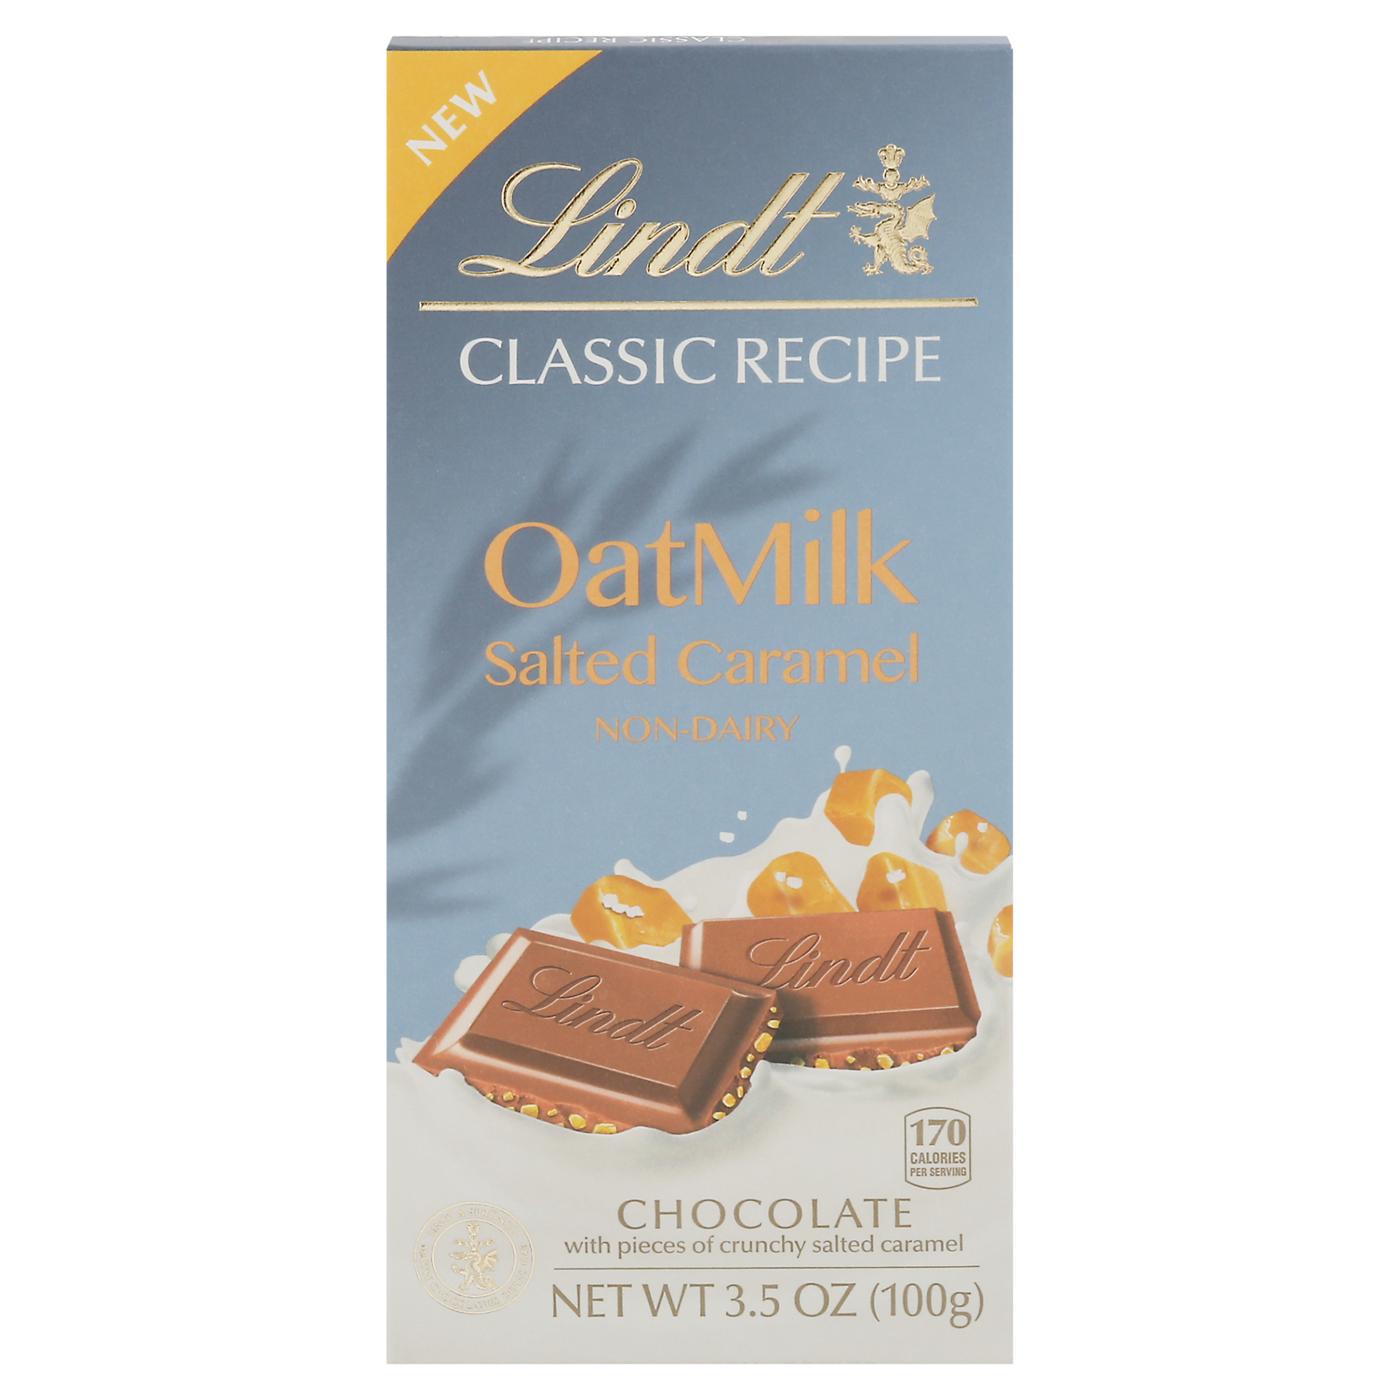 Lindt Classic Recipe Oat Milk Salted Caramel Bar; image 1 of 3